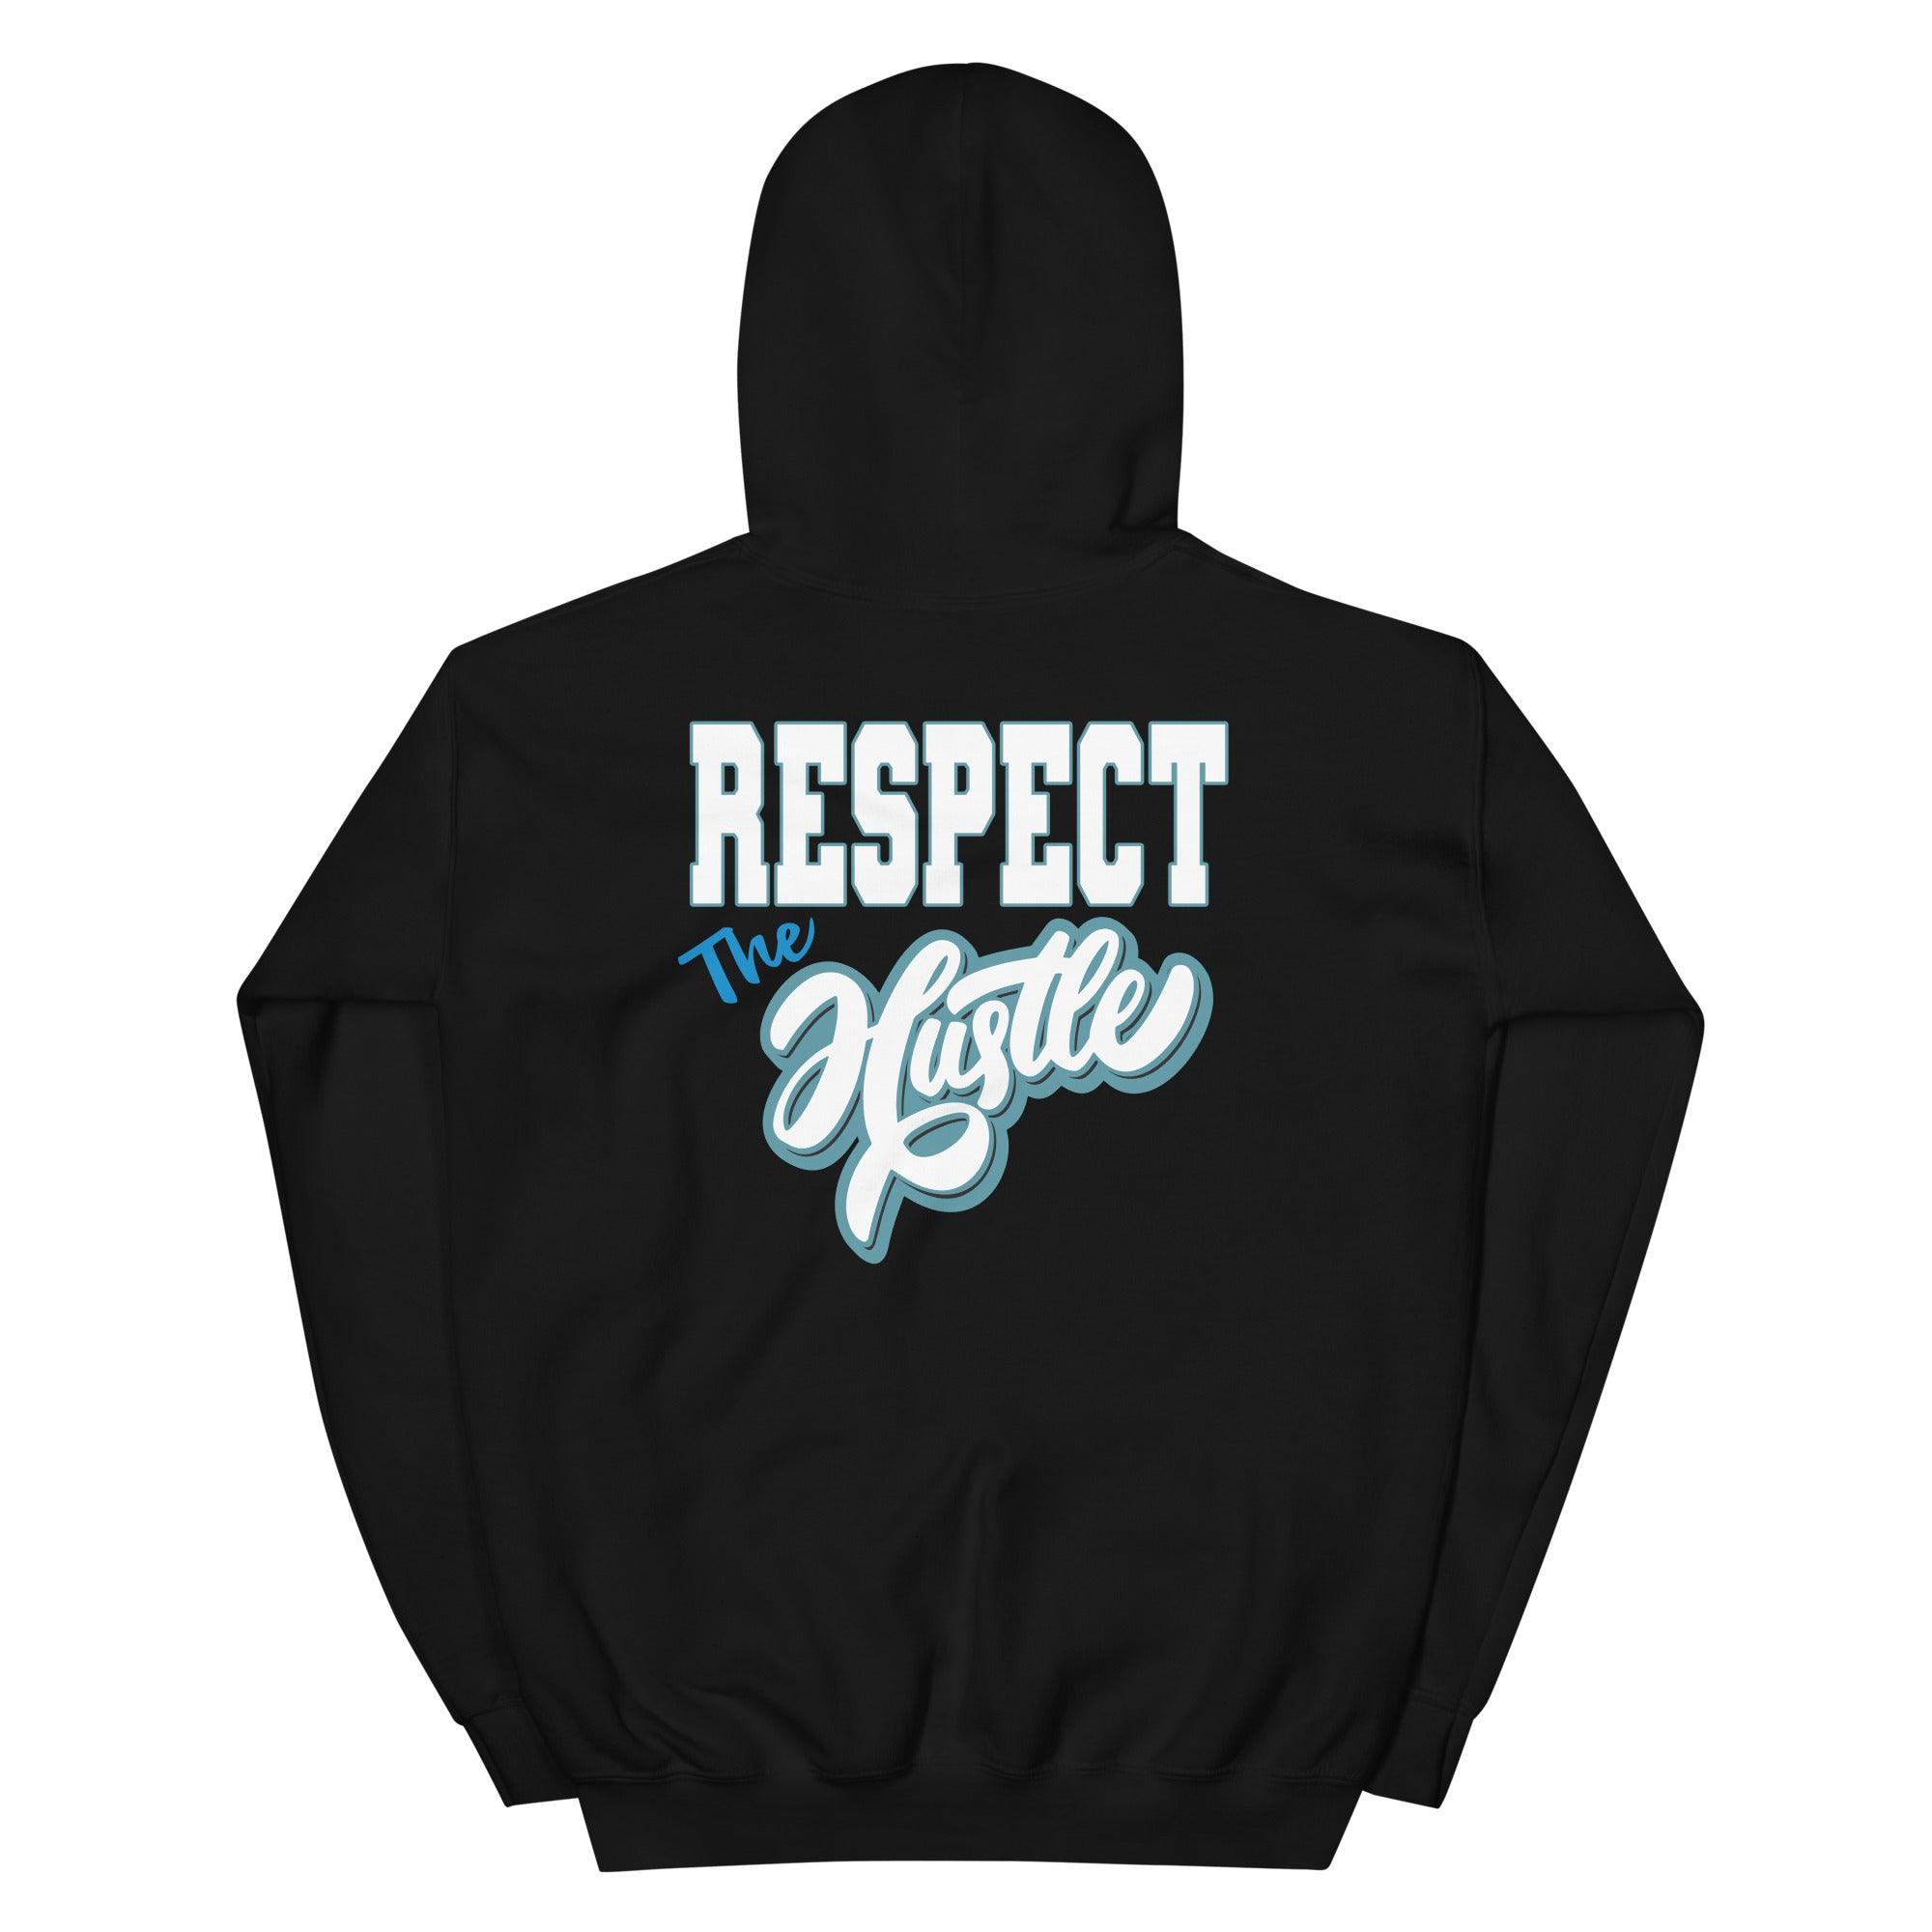 Respect The Hustle Sneaker Sweatshirt AJ 11s Retro Low Legend Blue photo